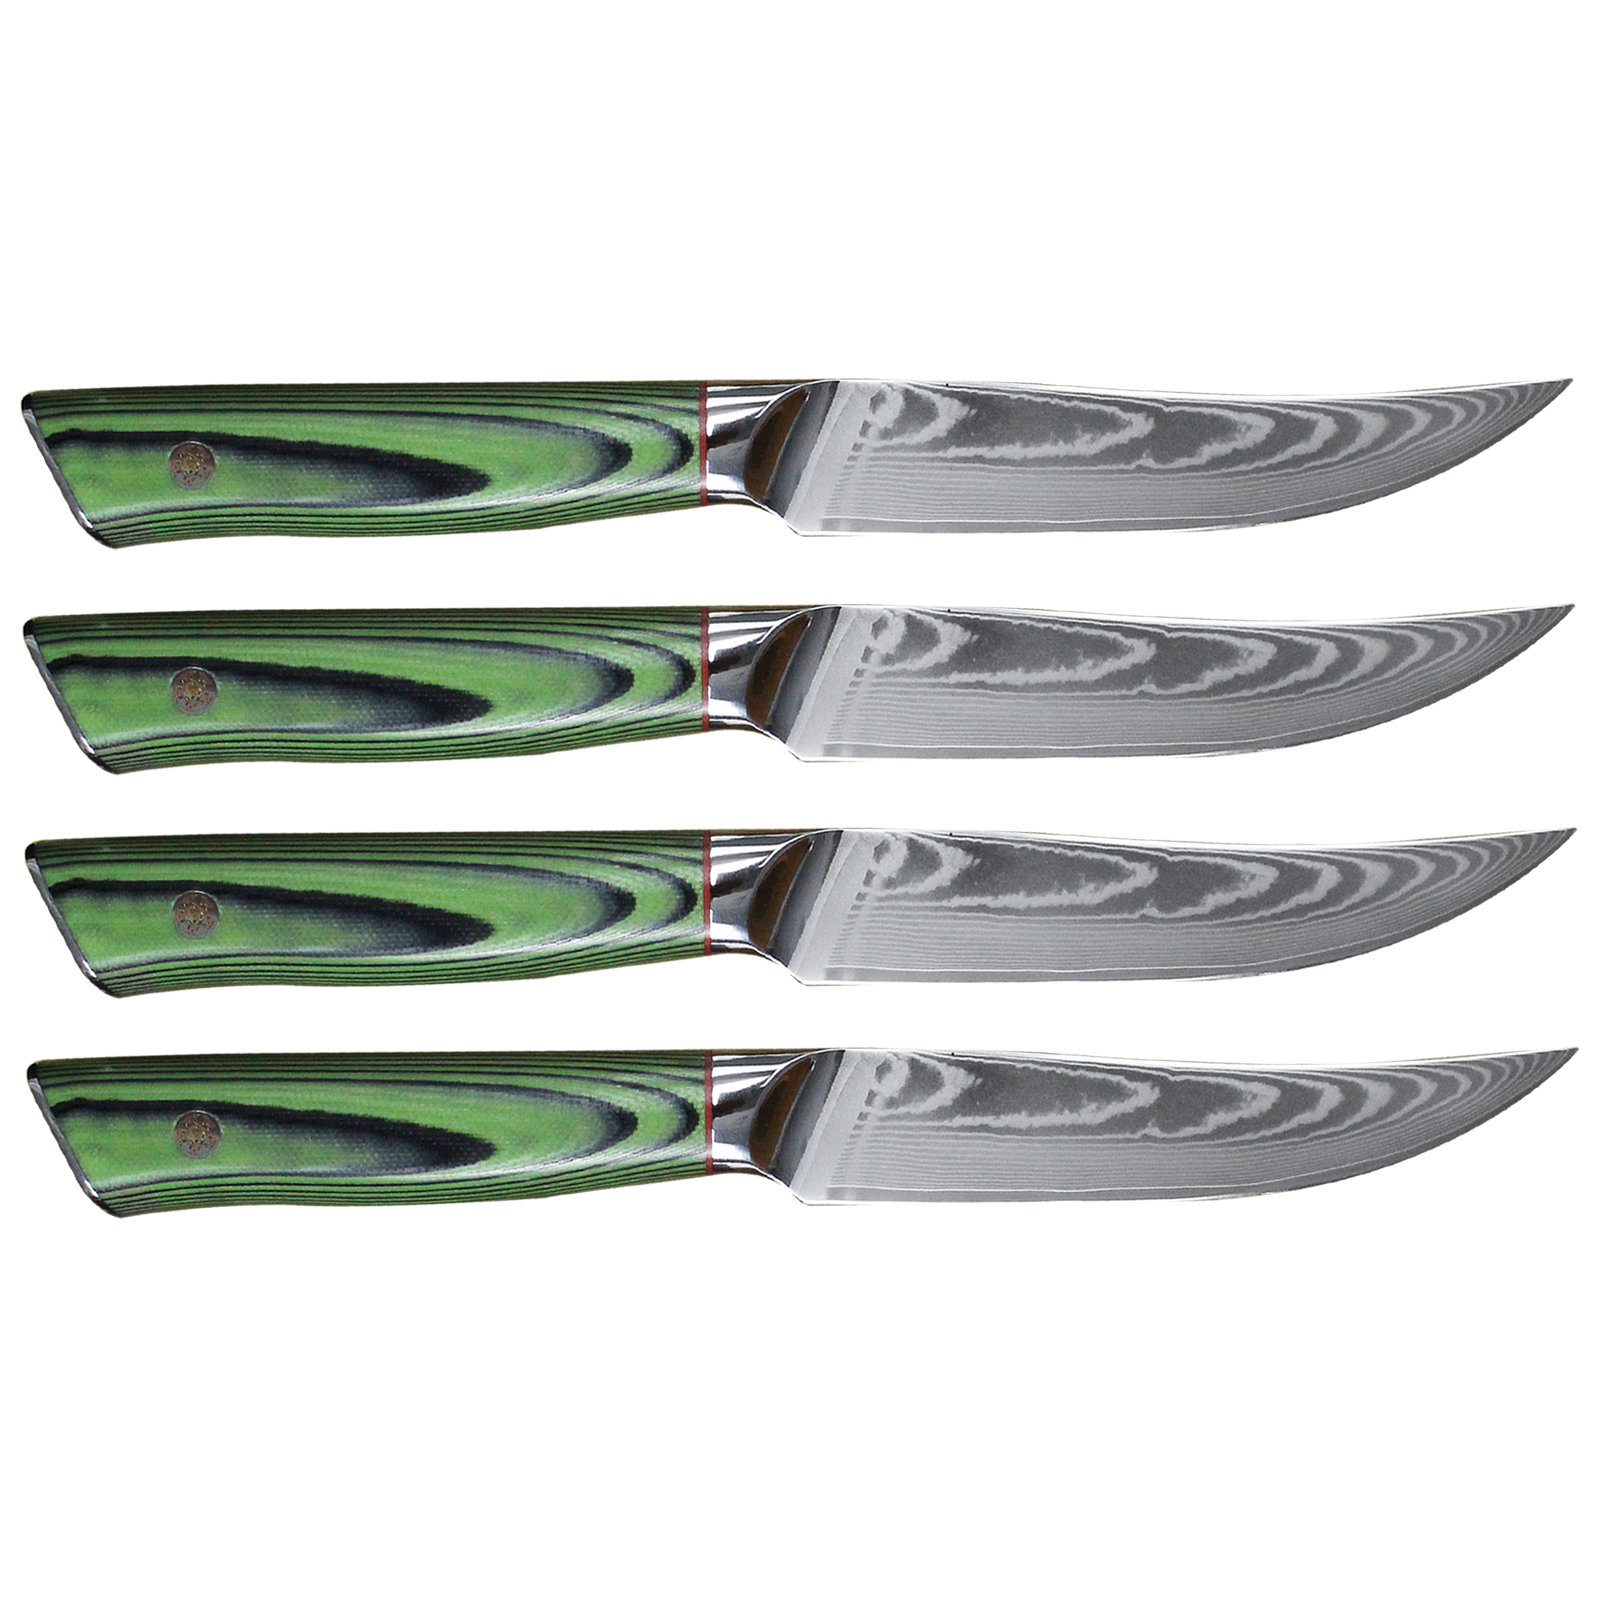 Damascus Steak Knife Set of 4 - Green G10 Handle